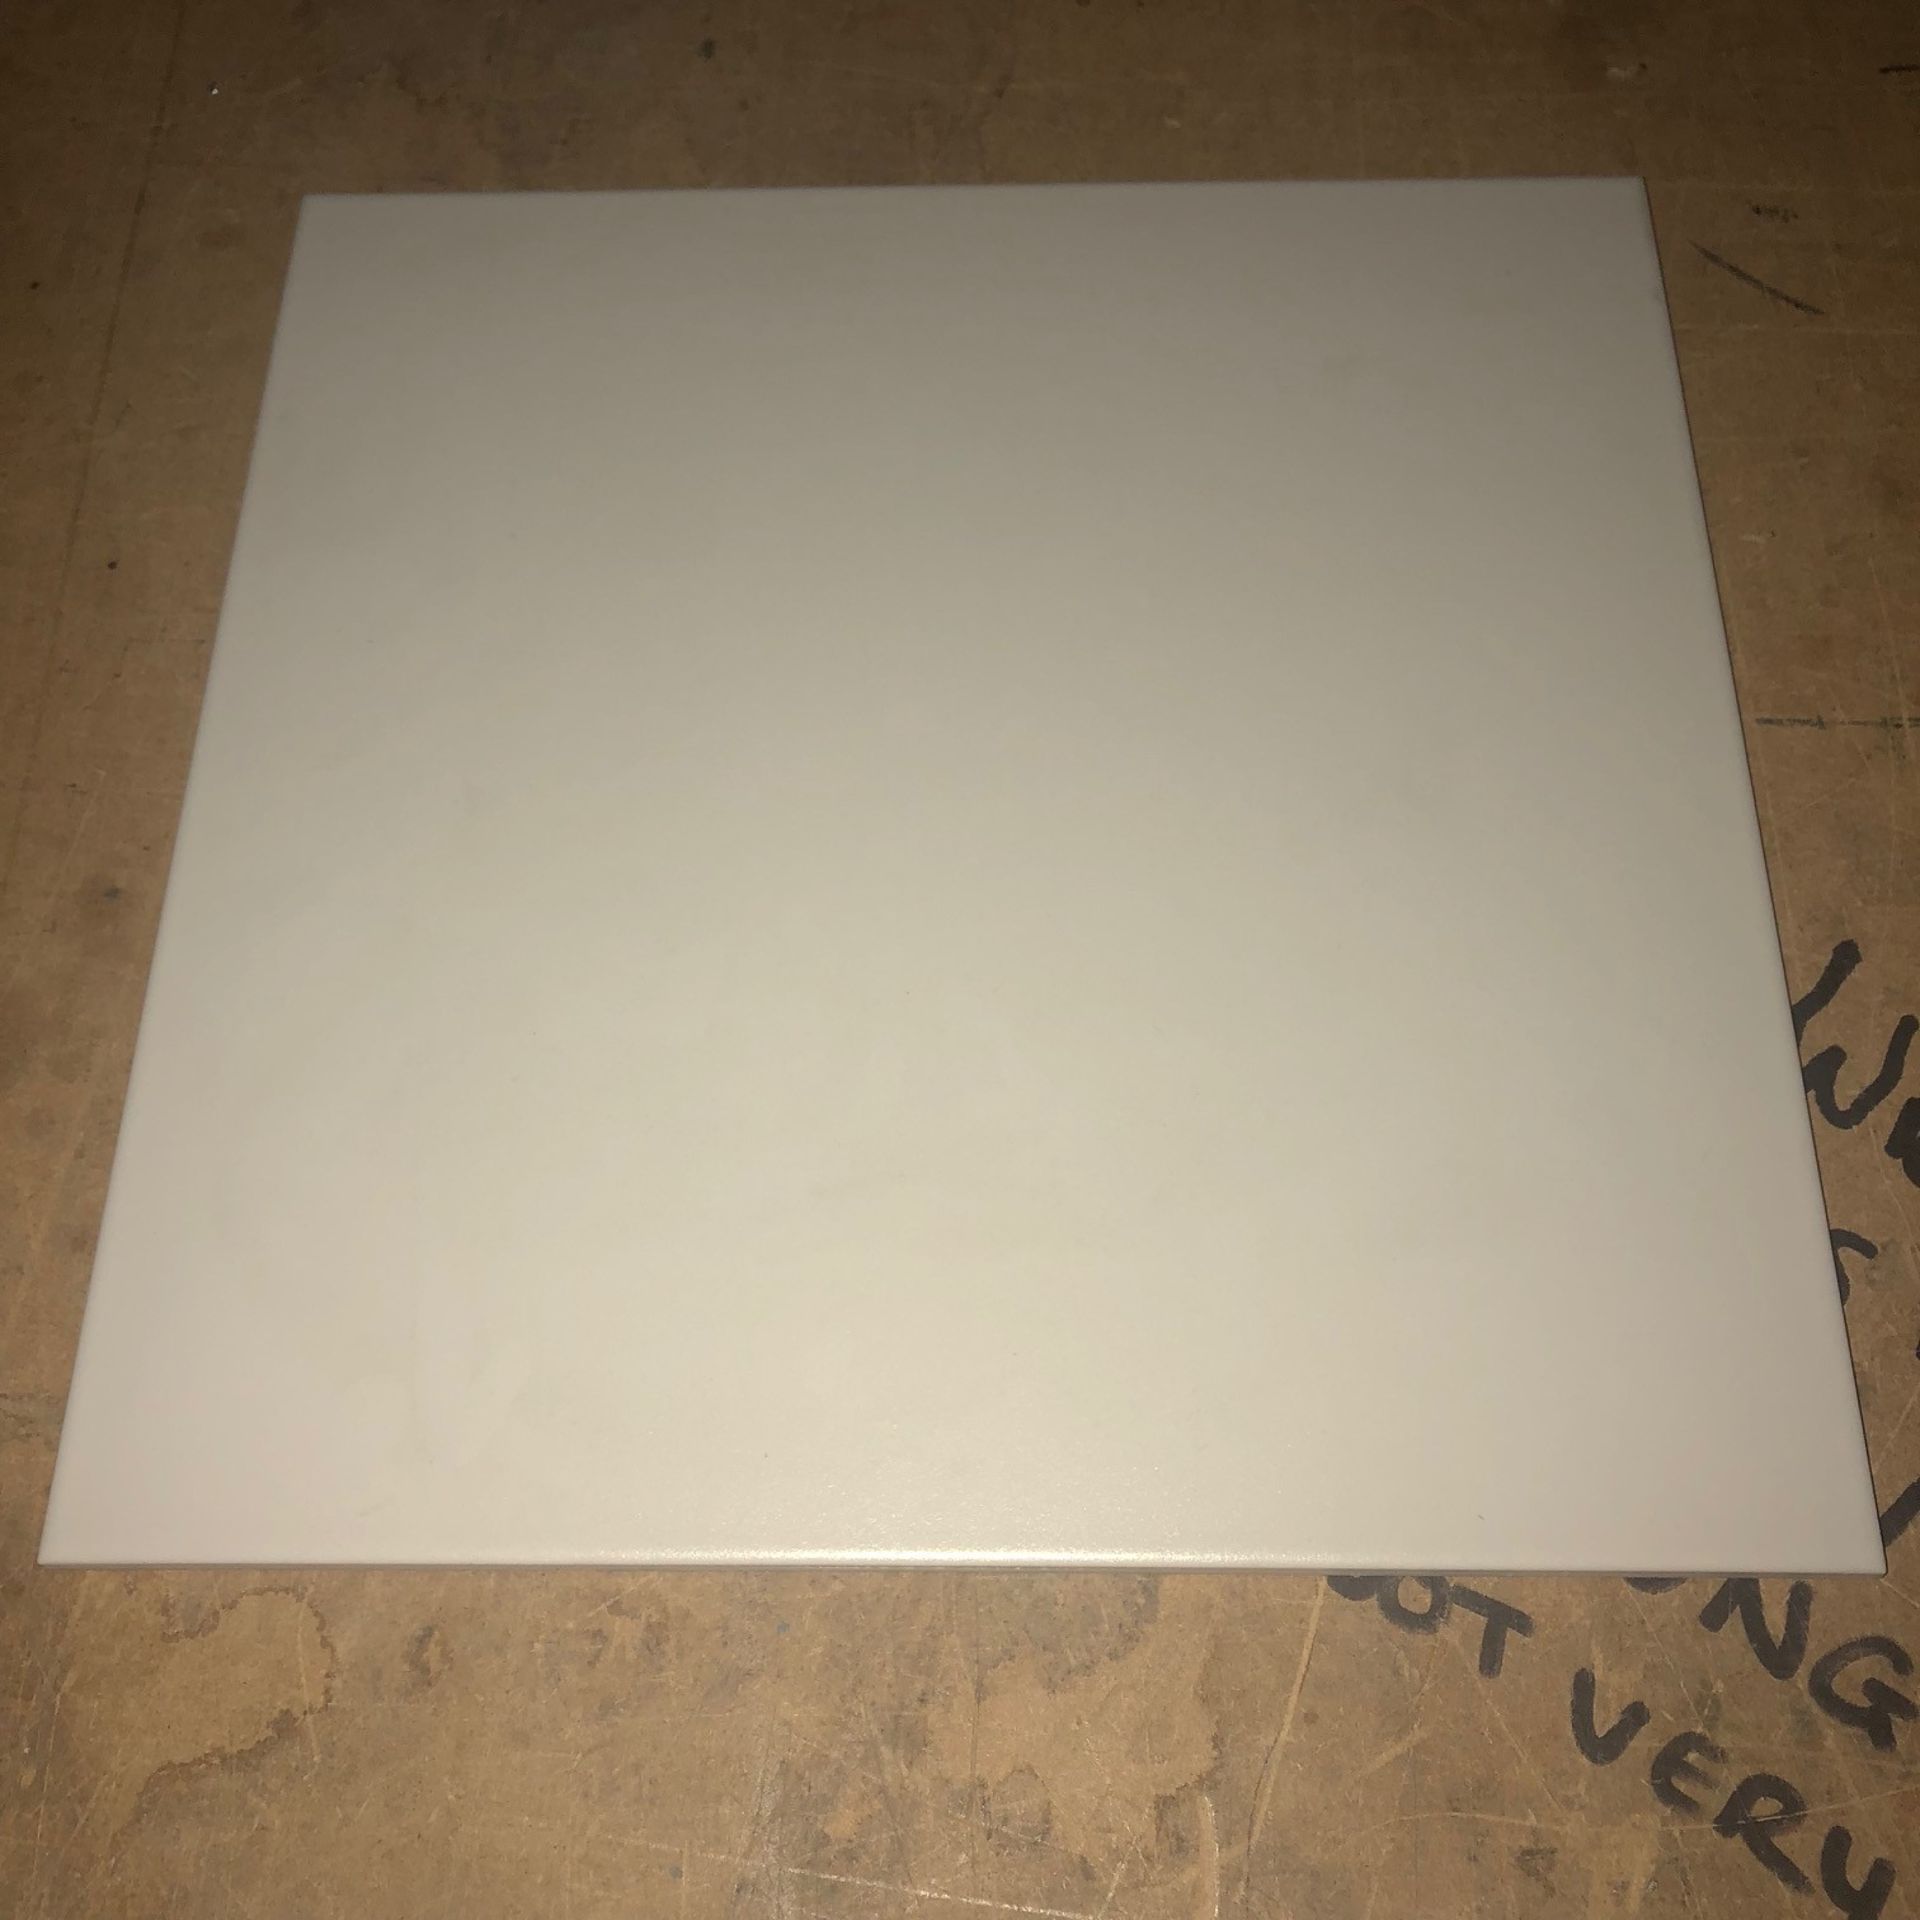 14 x Packs of Umbria Tiles in White - 9 Per Pack - 33cm x 33cm - Image 3 of 4